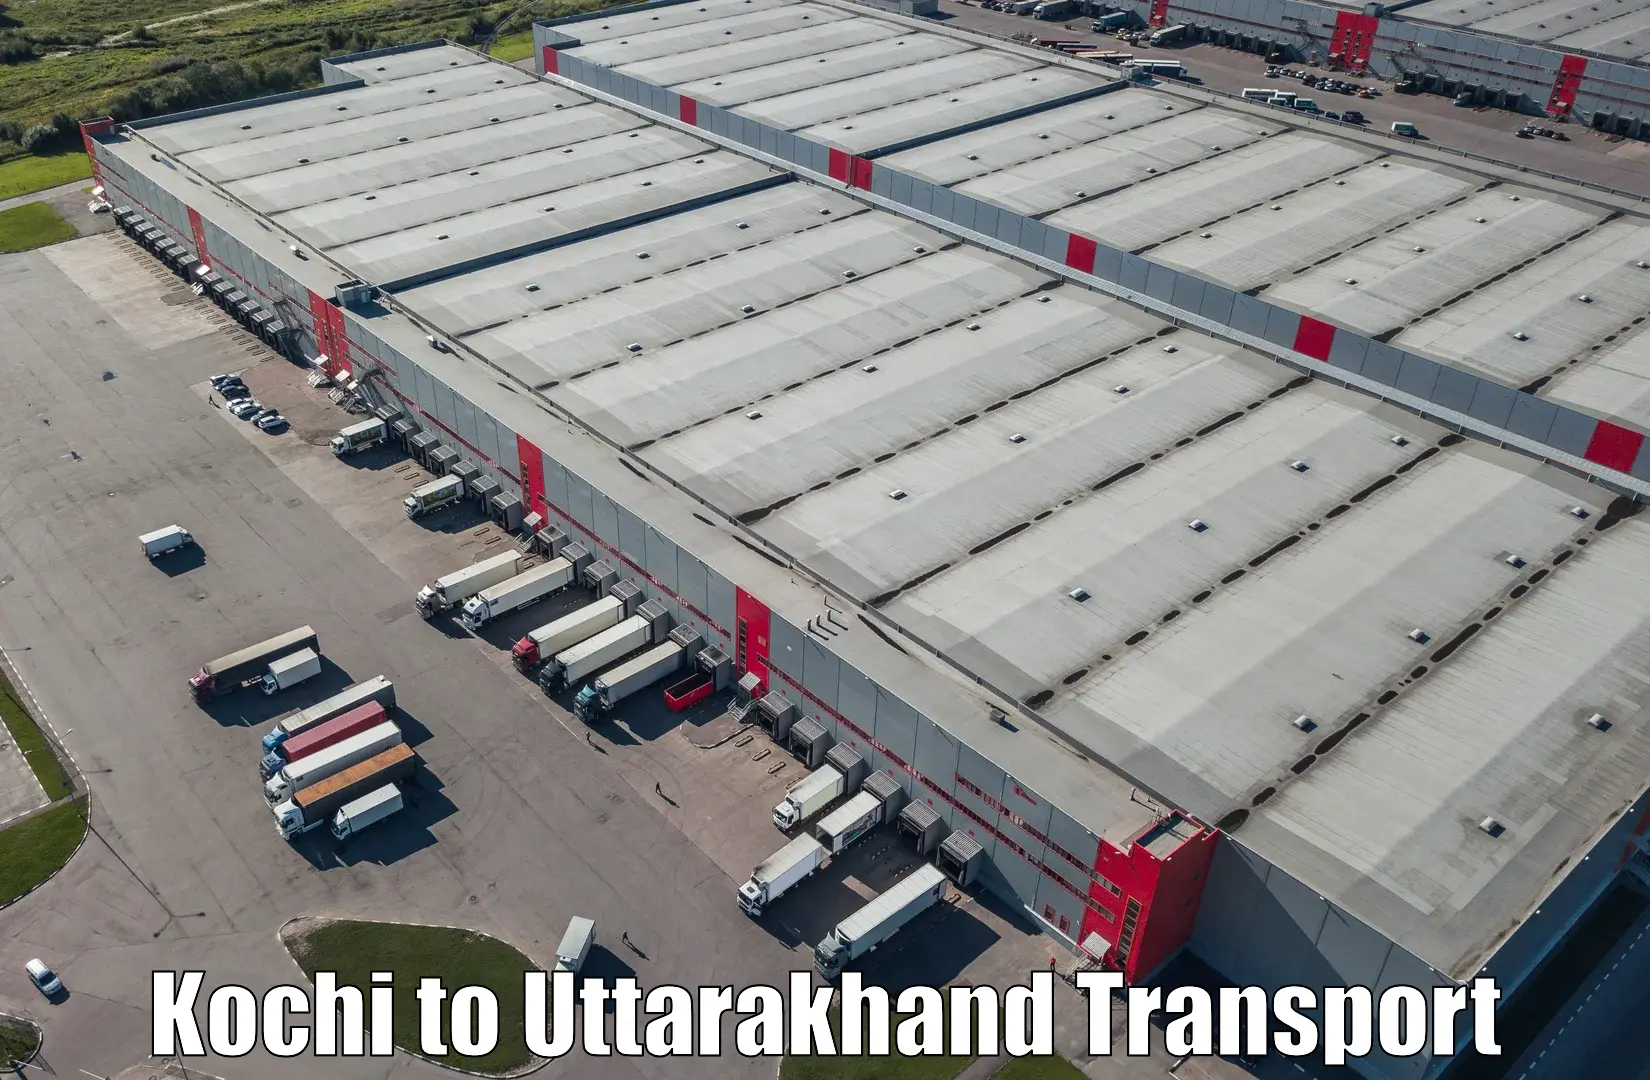 Transport in sharing Kochi to IIT Roorkee